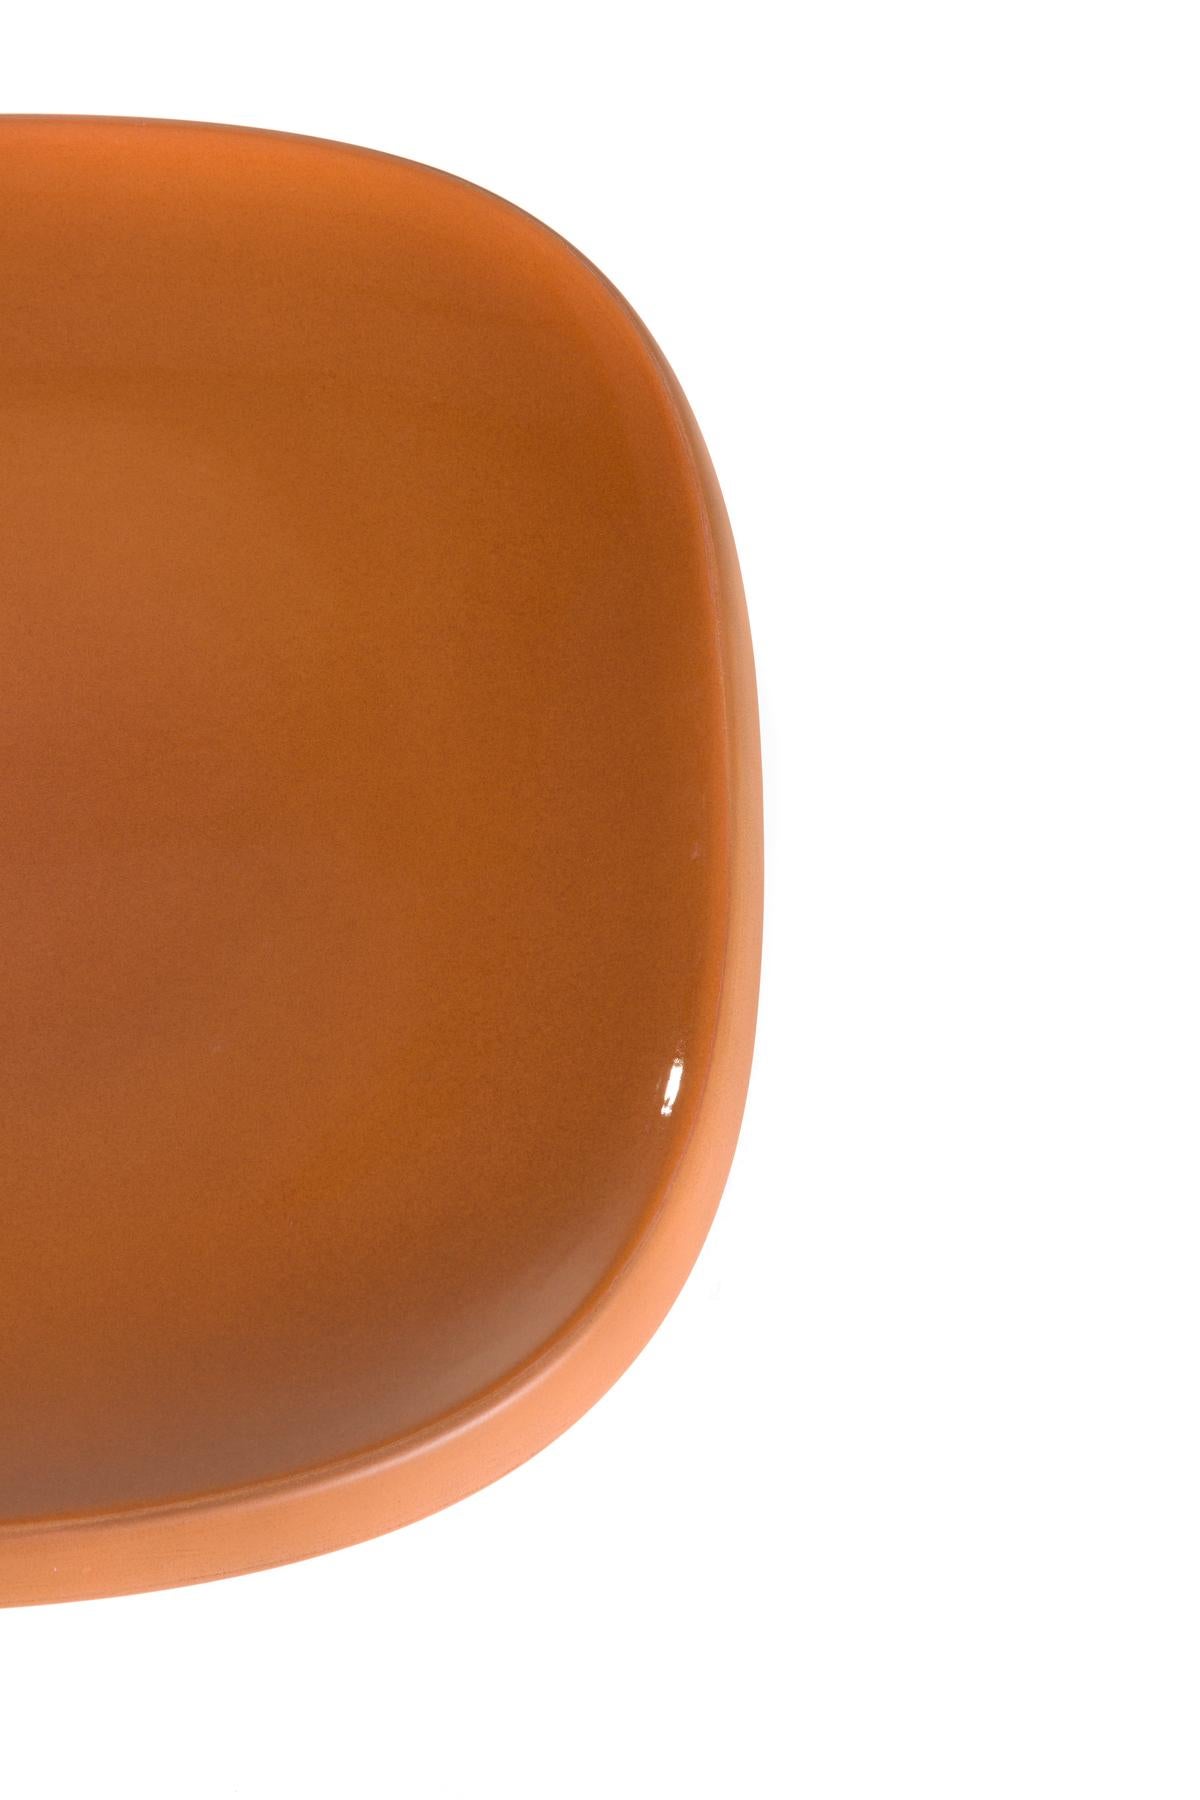 Modern Moooi Obon Rectangular Low Ceramic Table in Terracotta Finish by Simone Bonanni For Sale